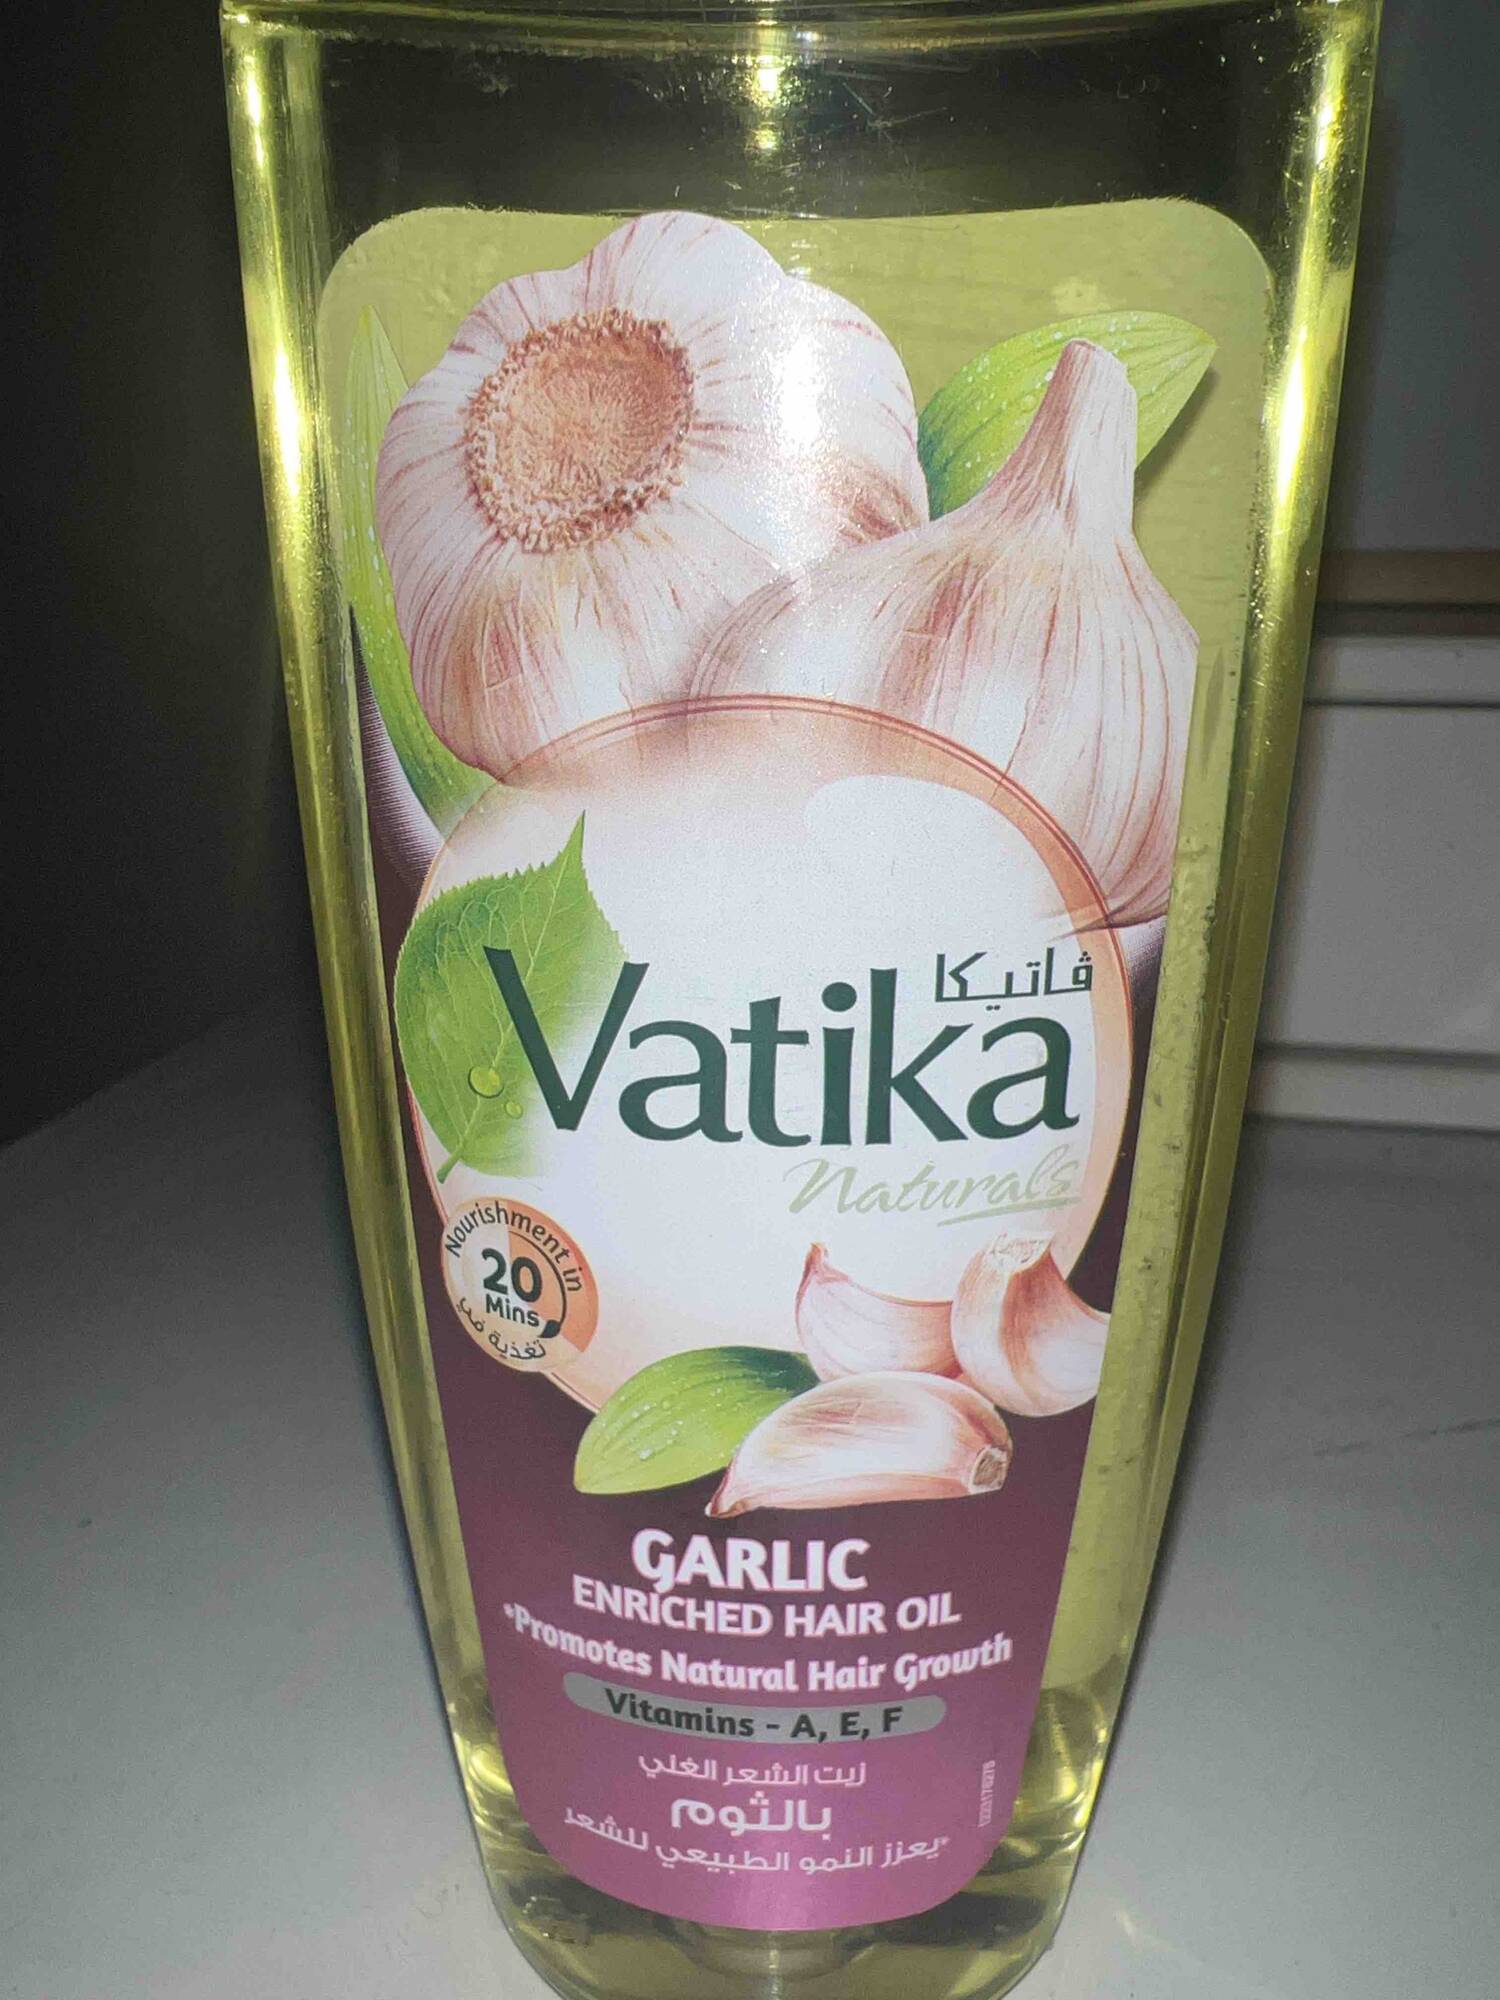 VATIKA NATURALS - Garlic - Enriched hair oil